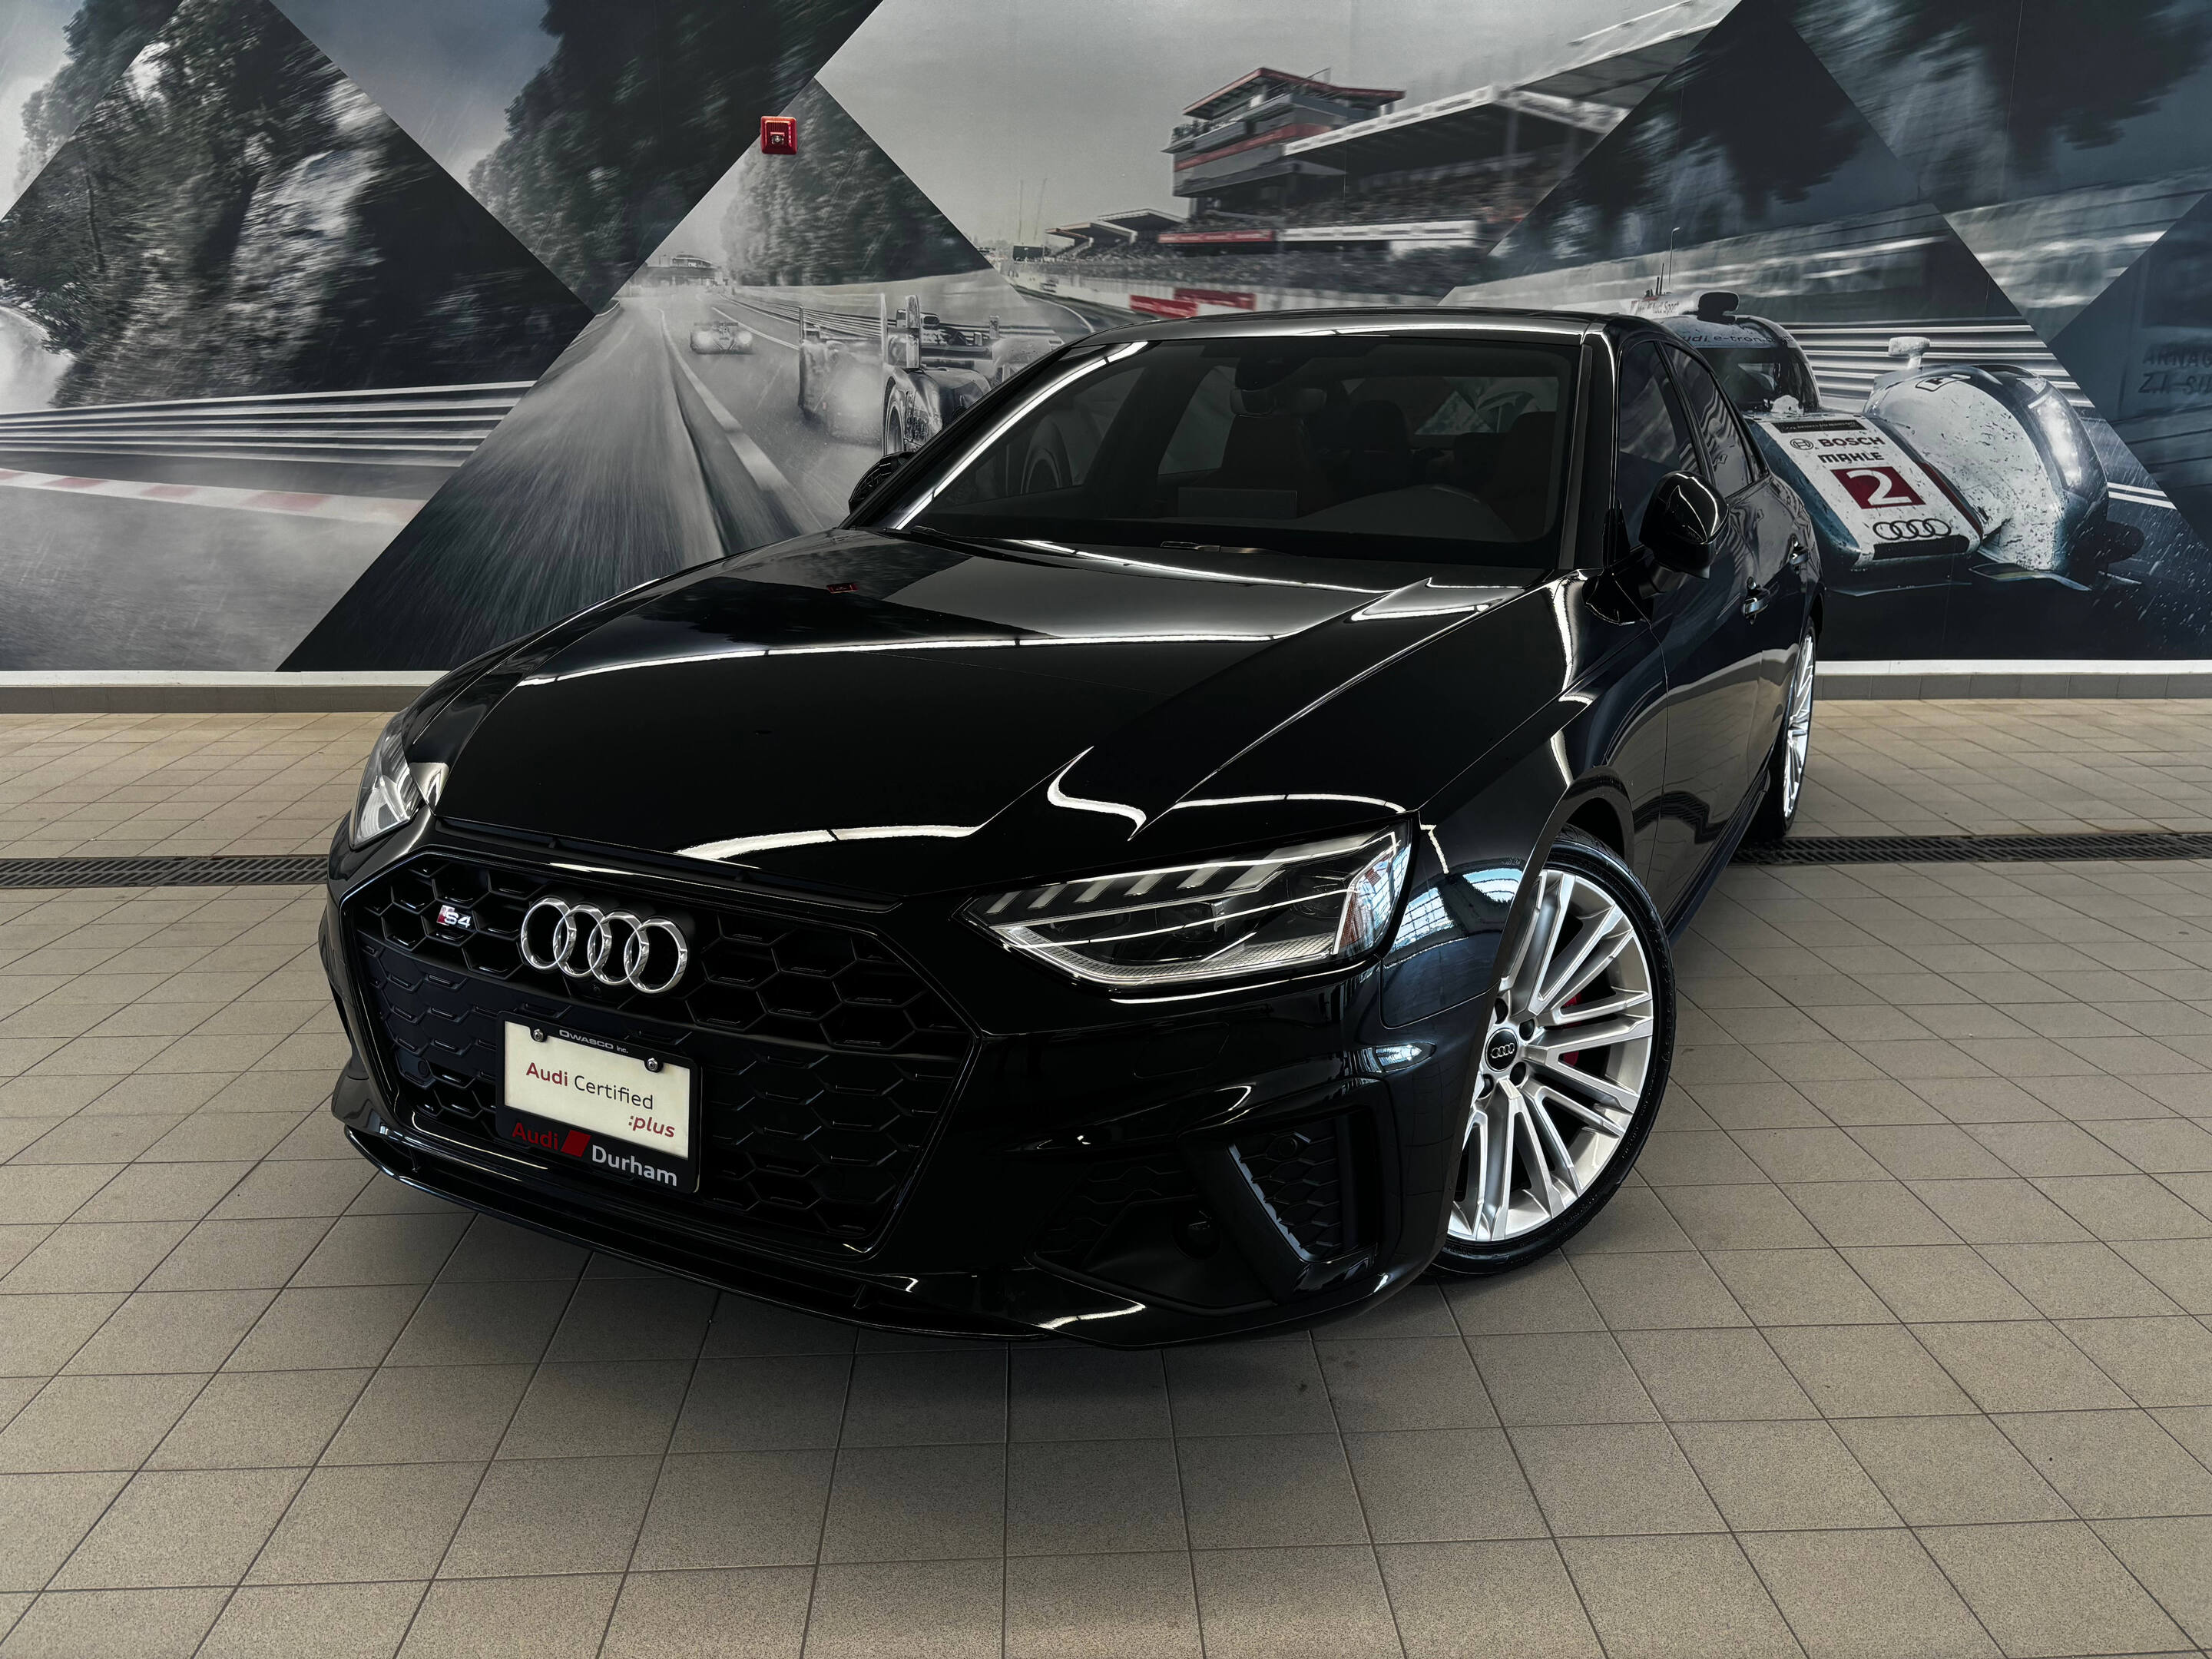 2020 Audi S4 3.0T Technik + SALES EVENT | $500 Off, May 9-11